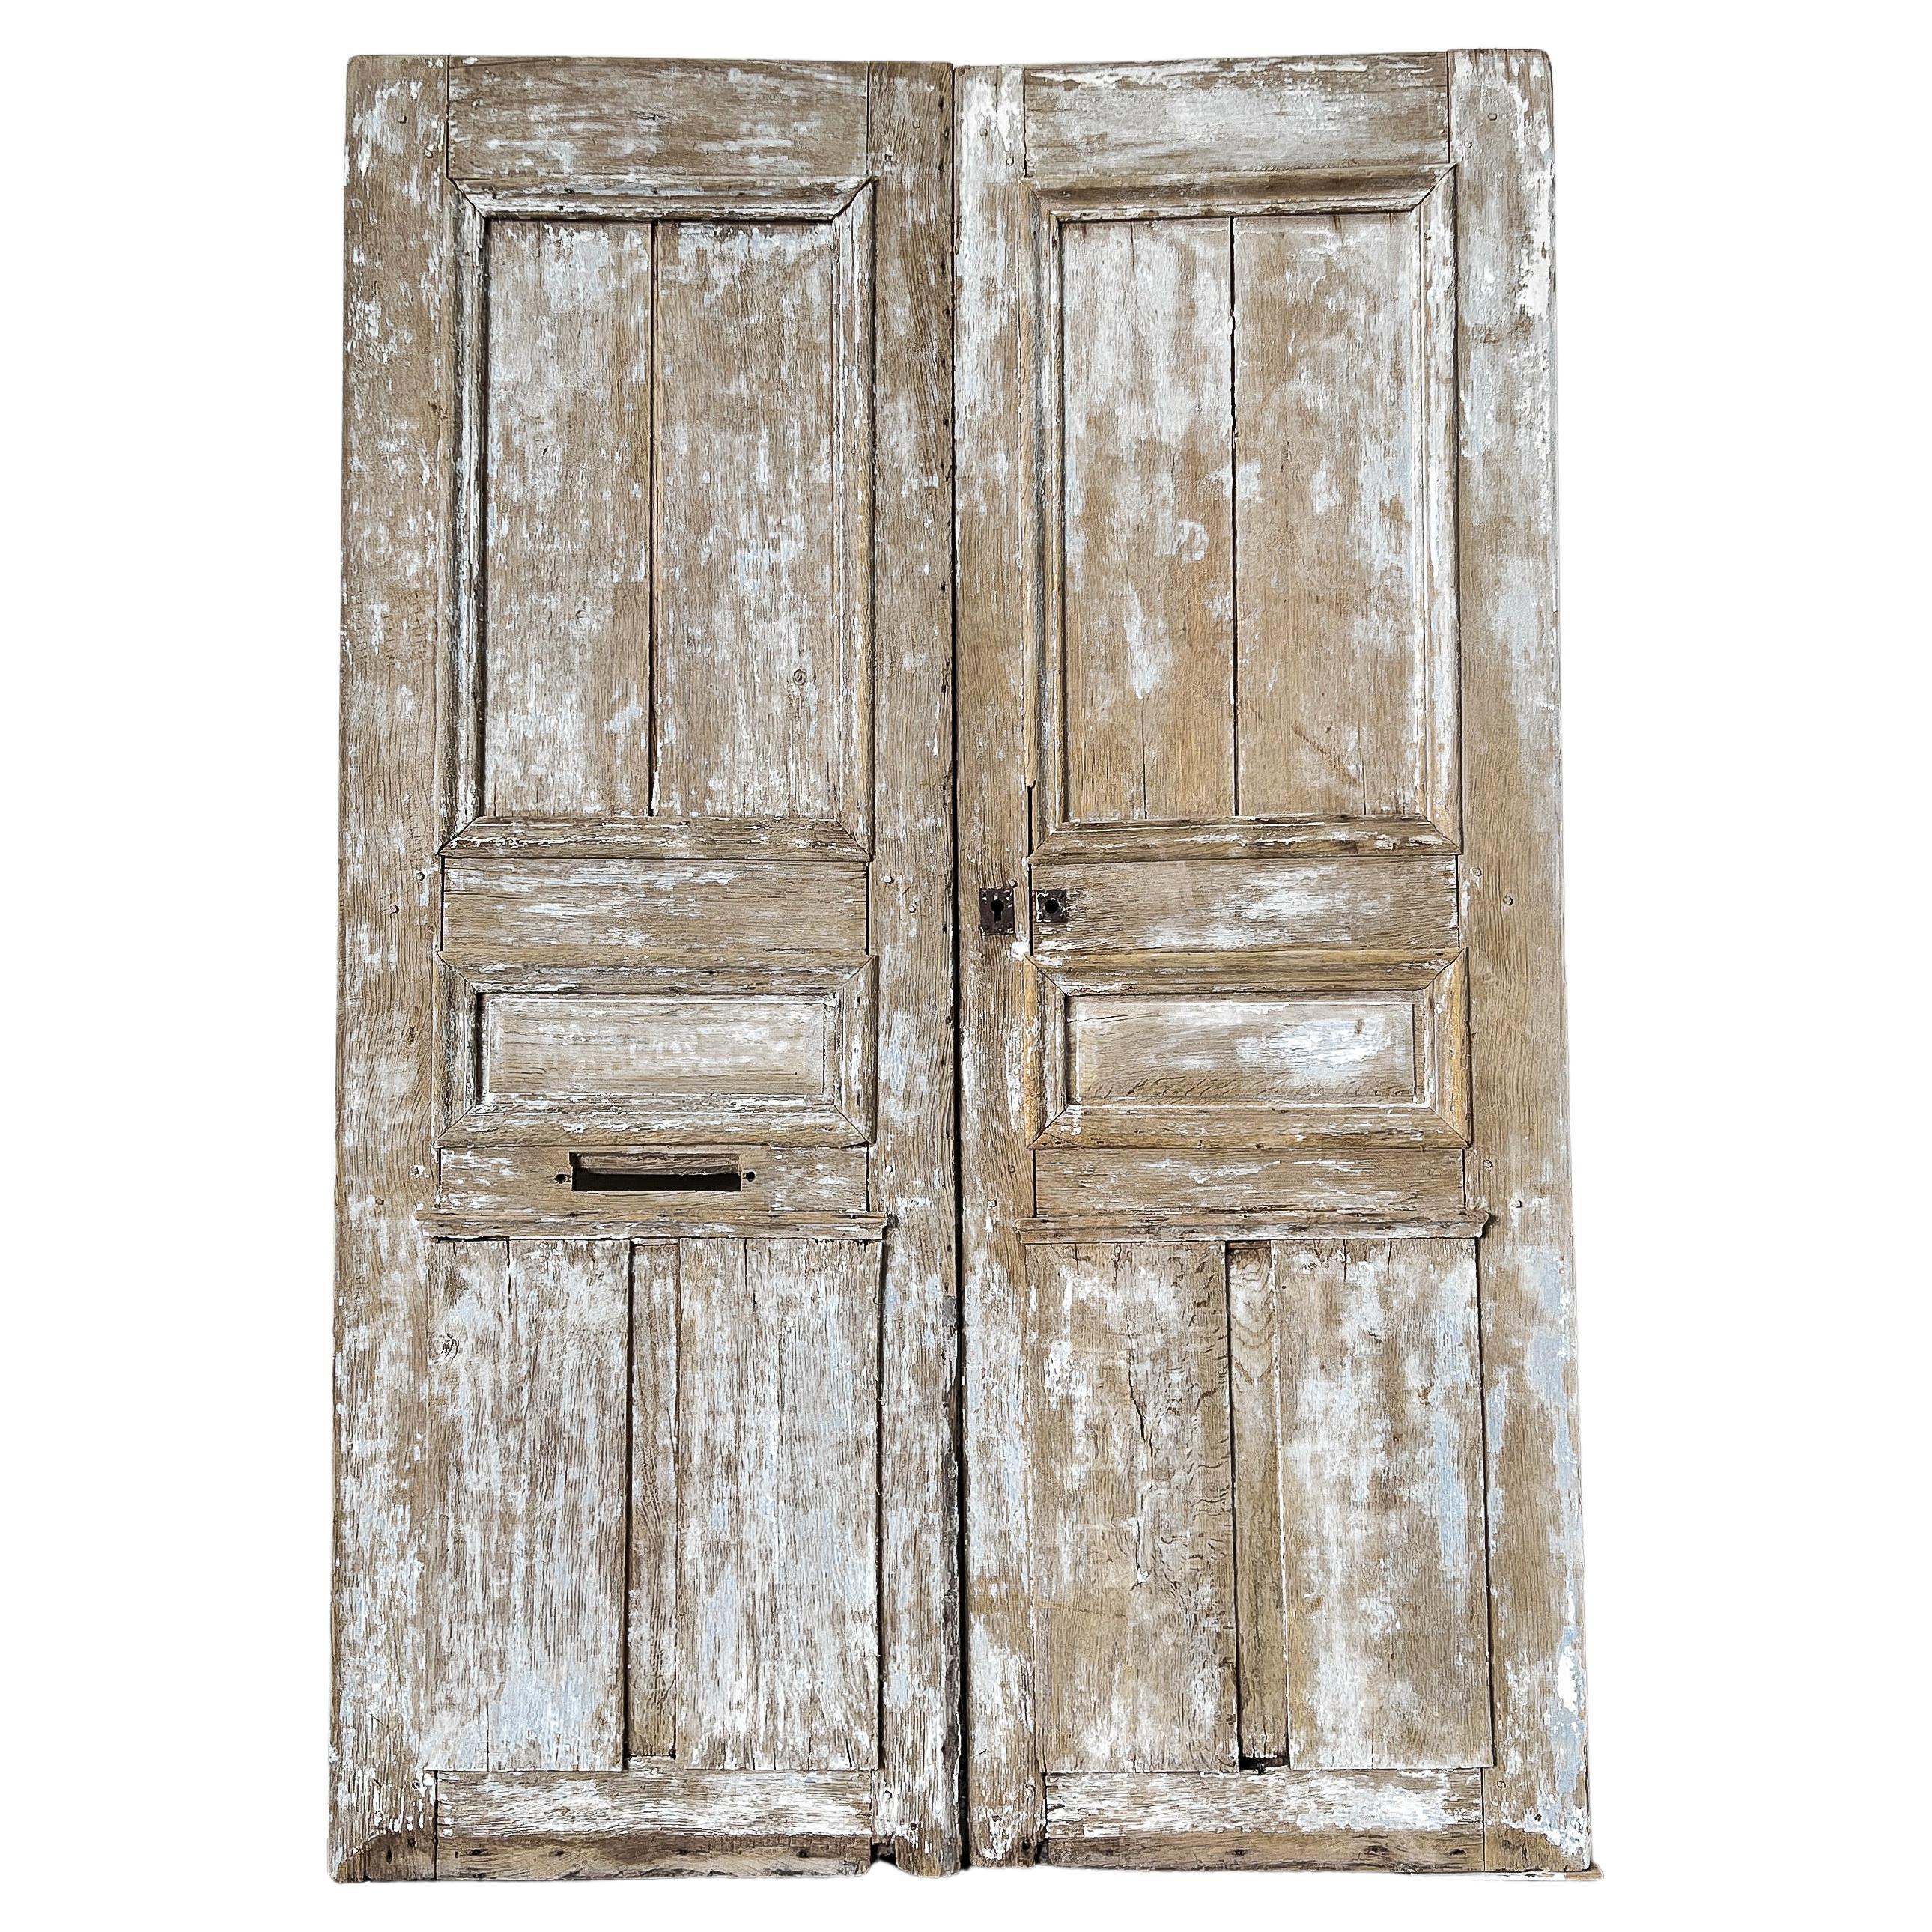 Reclaimed Rustic Oak French Exterior Doors